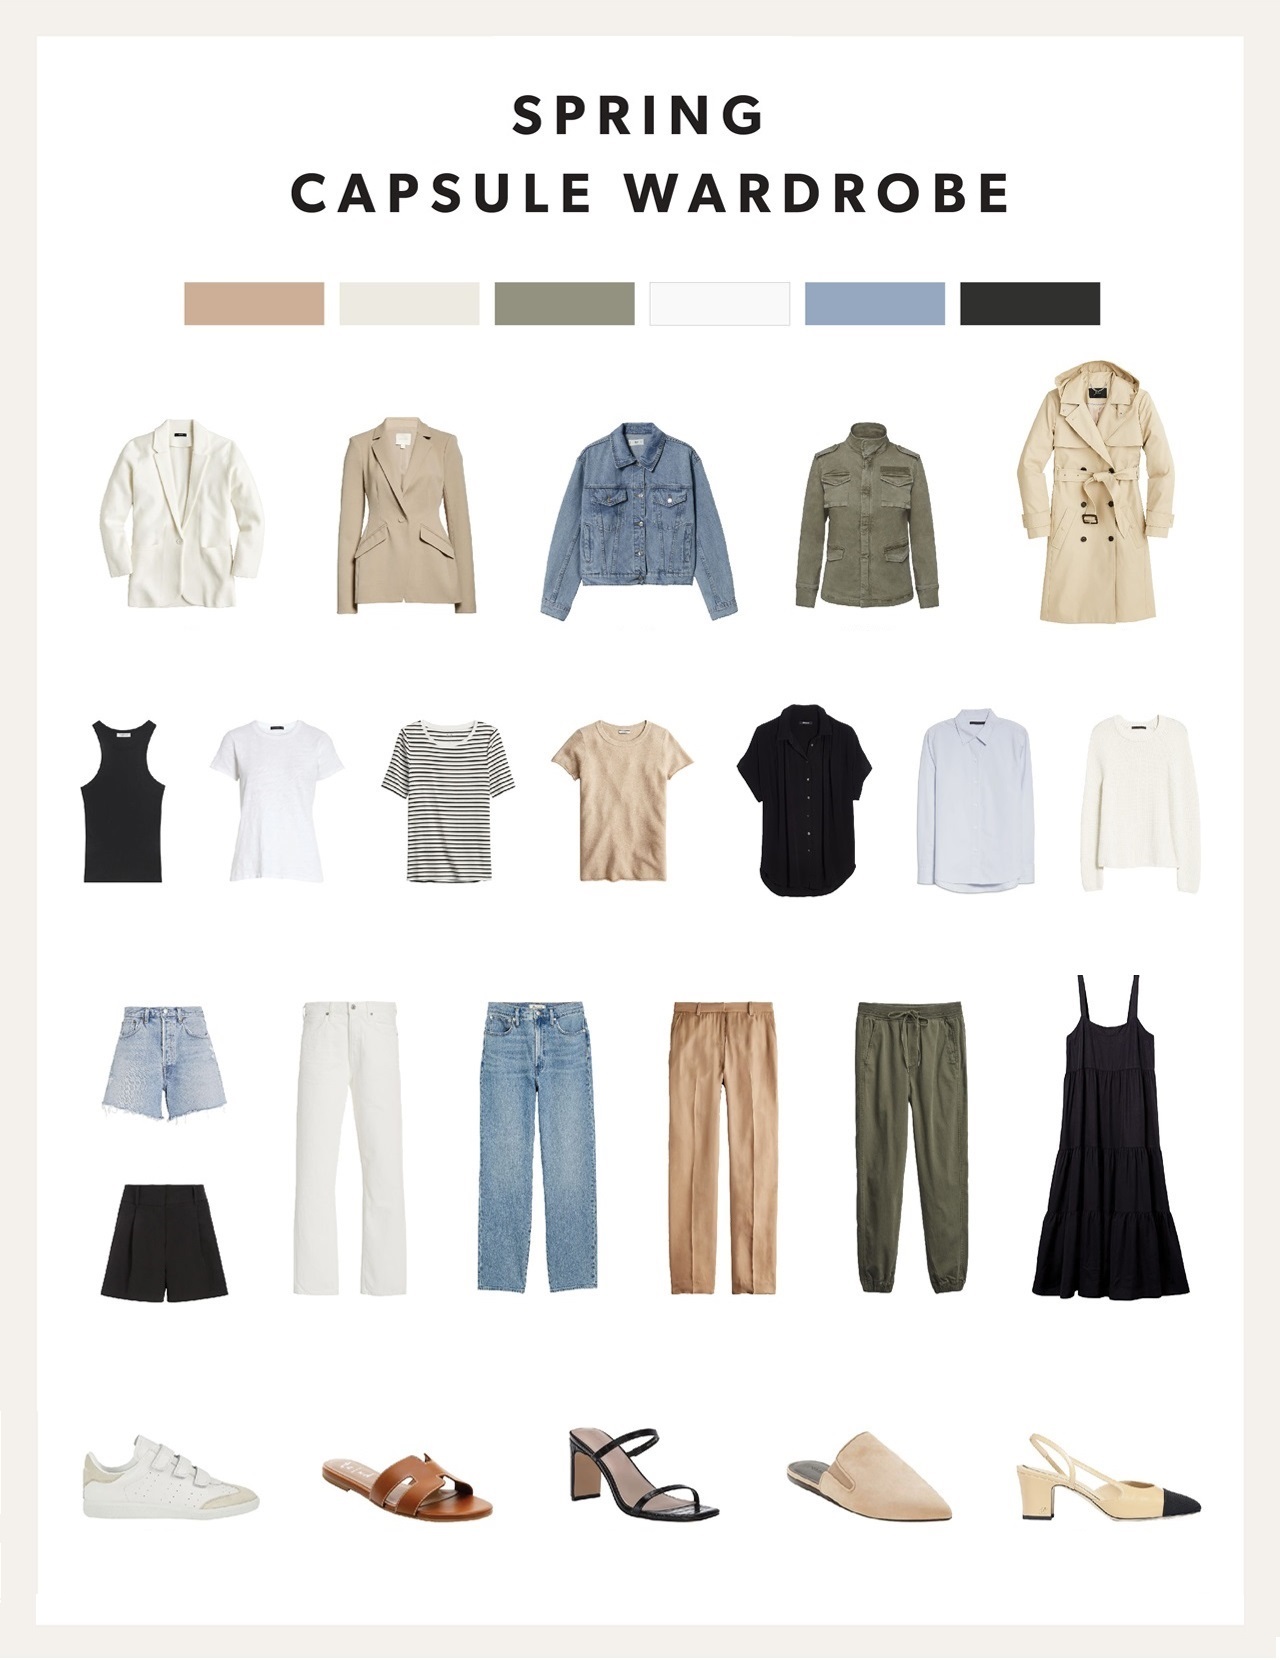 Capsule wardrobe για άνοιξη